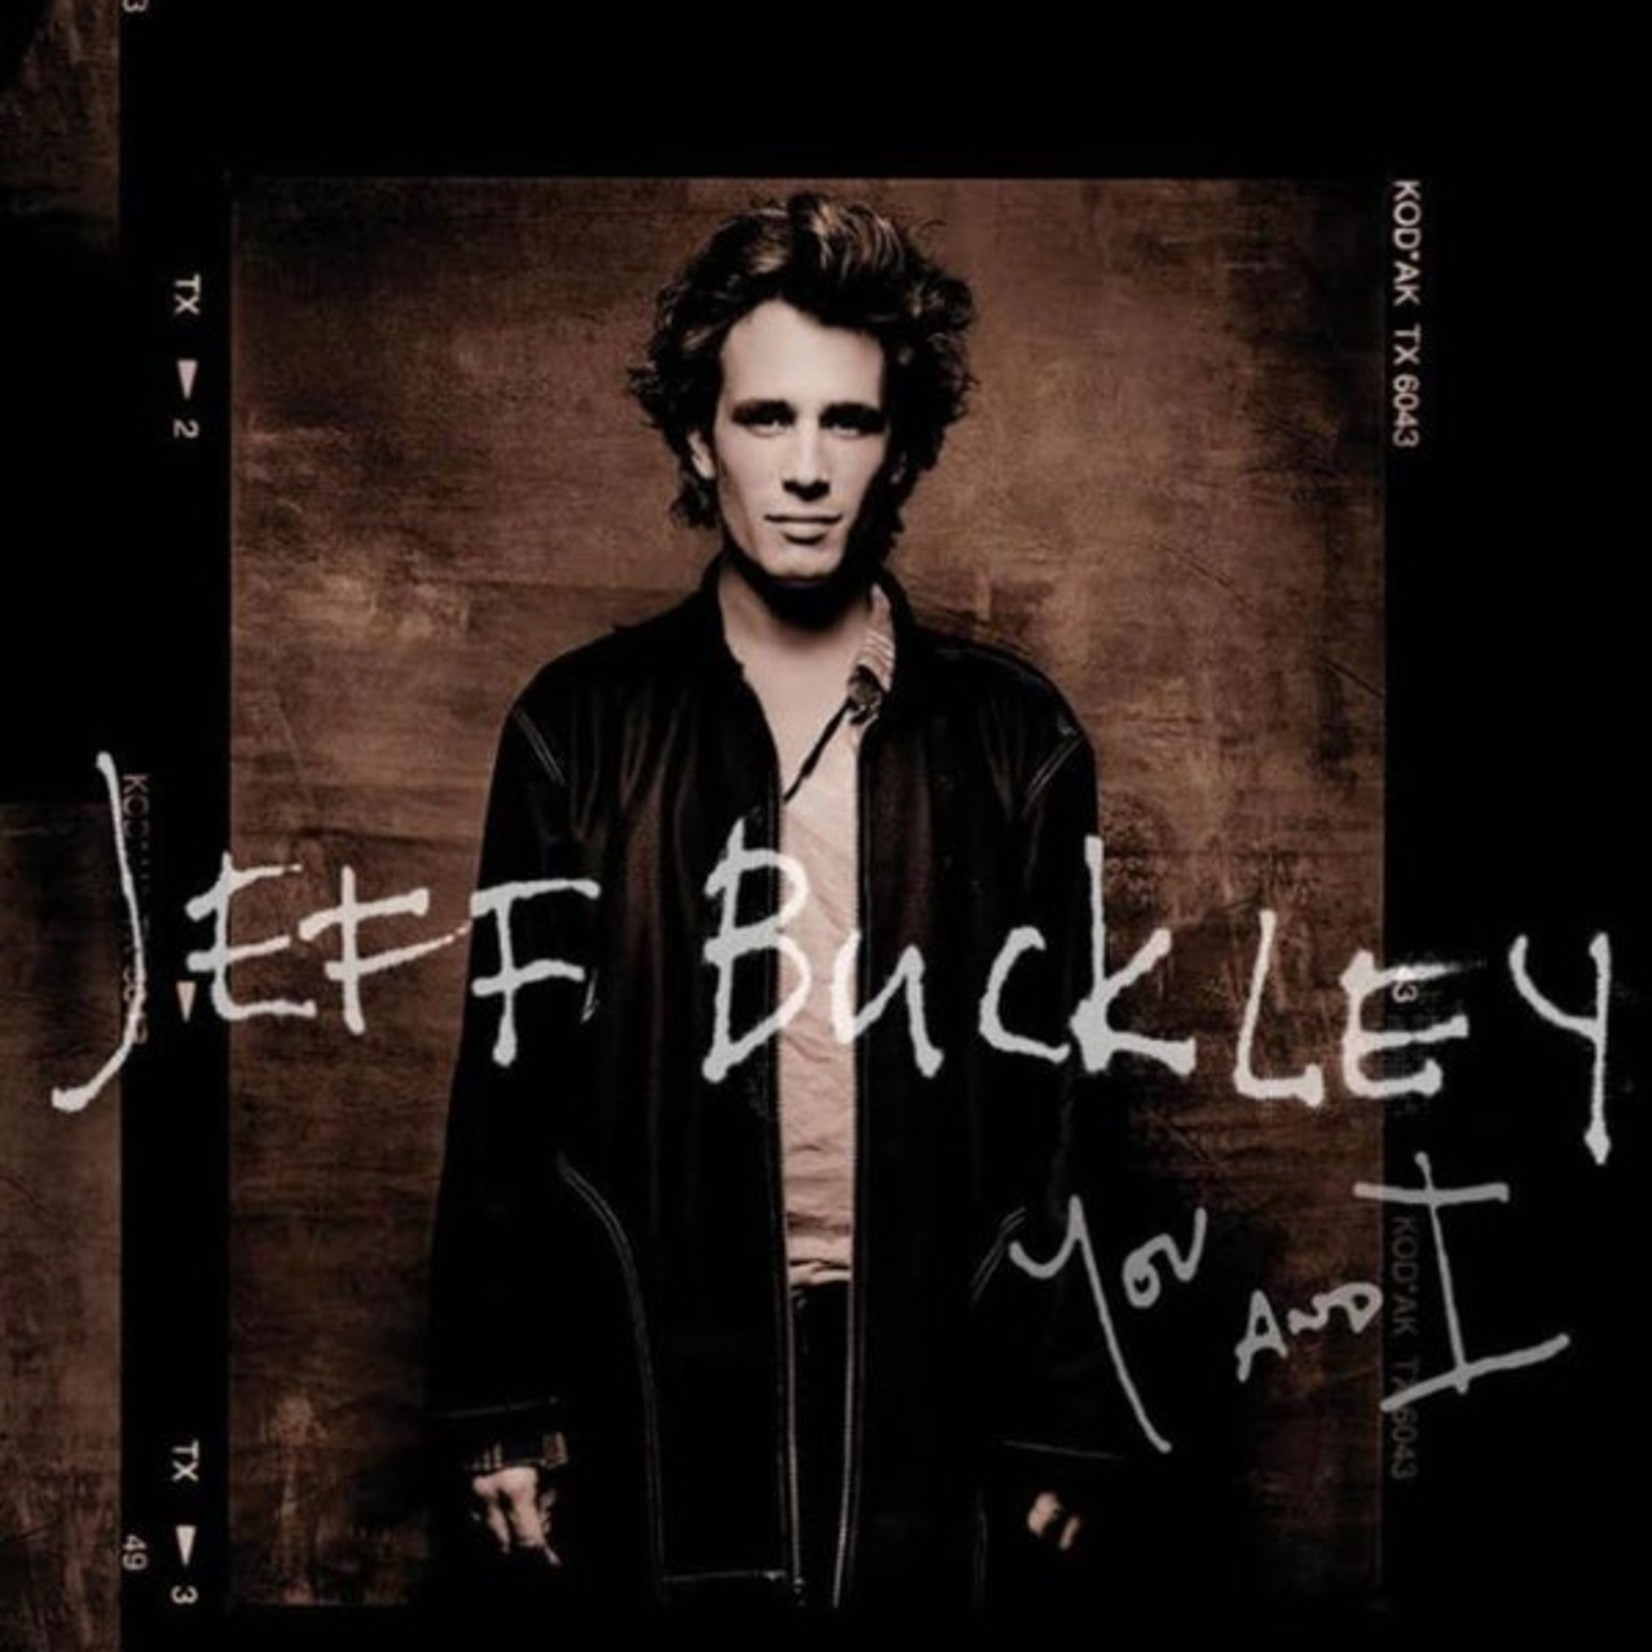 [New] Jeff Buckley - You & I